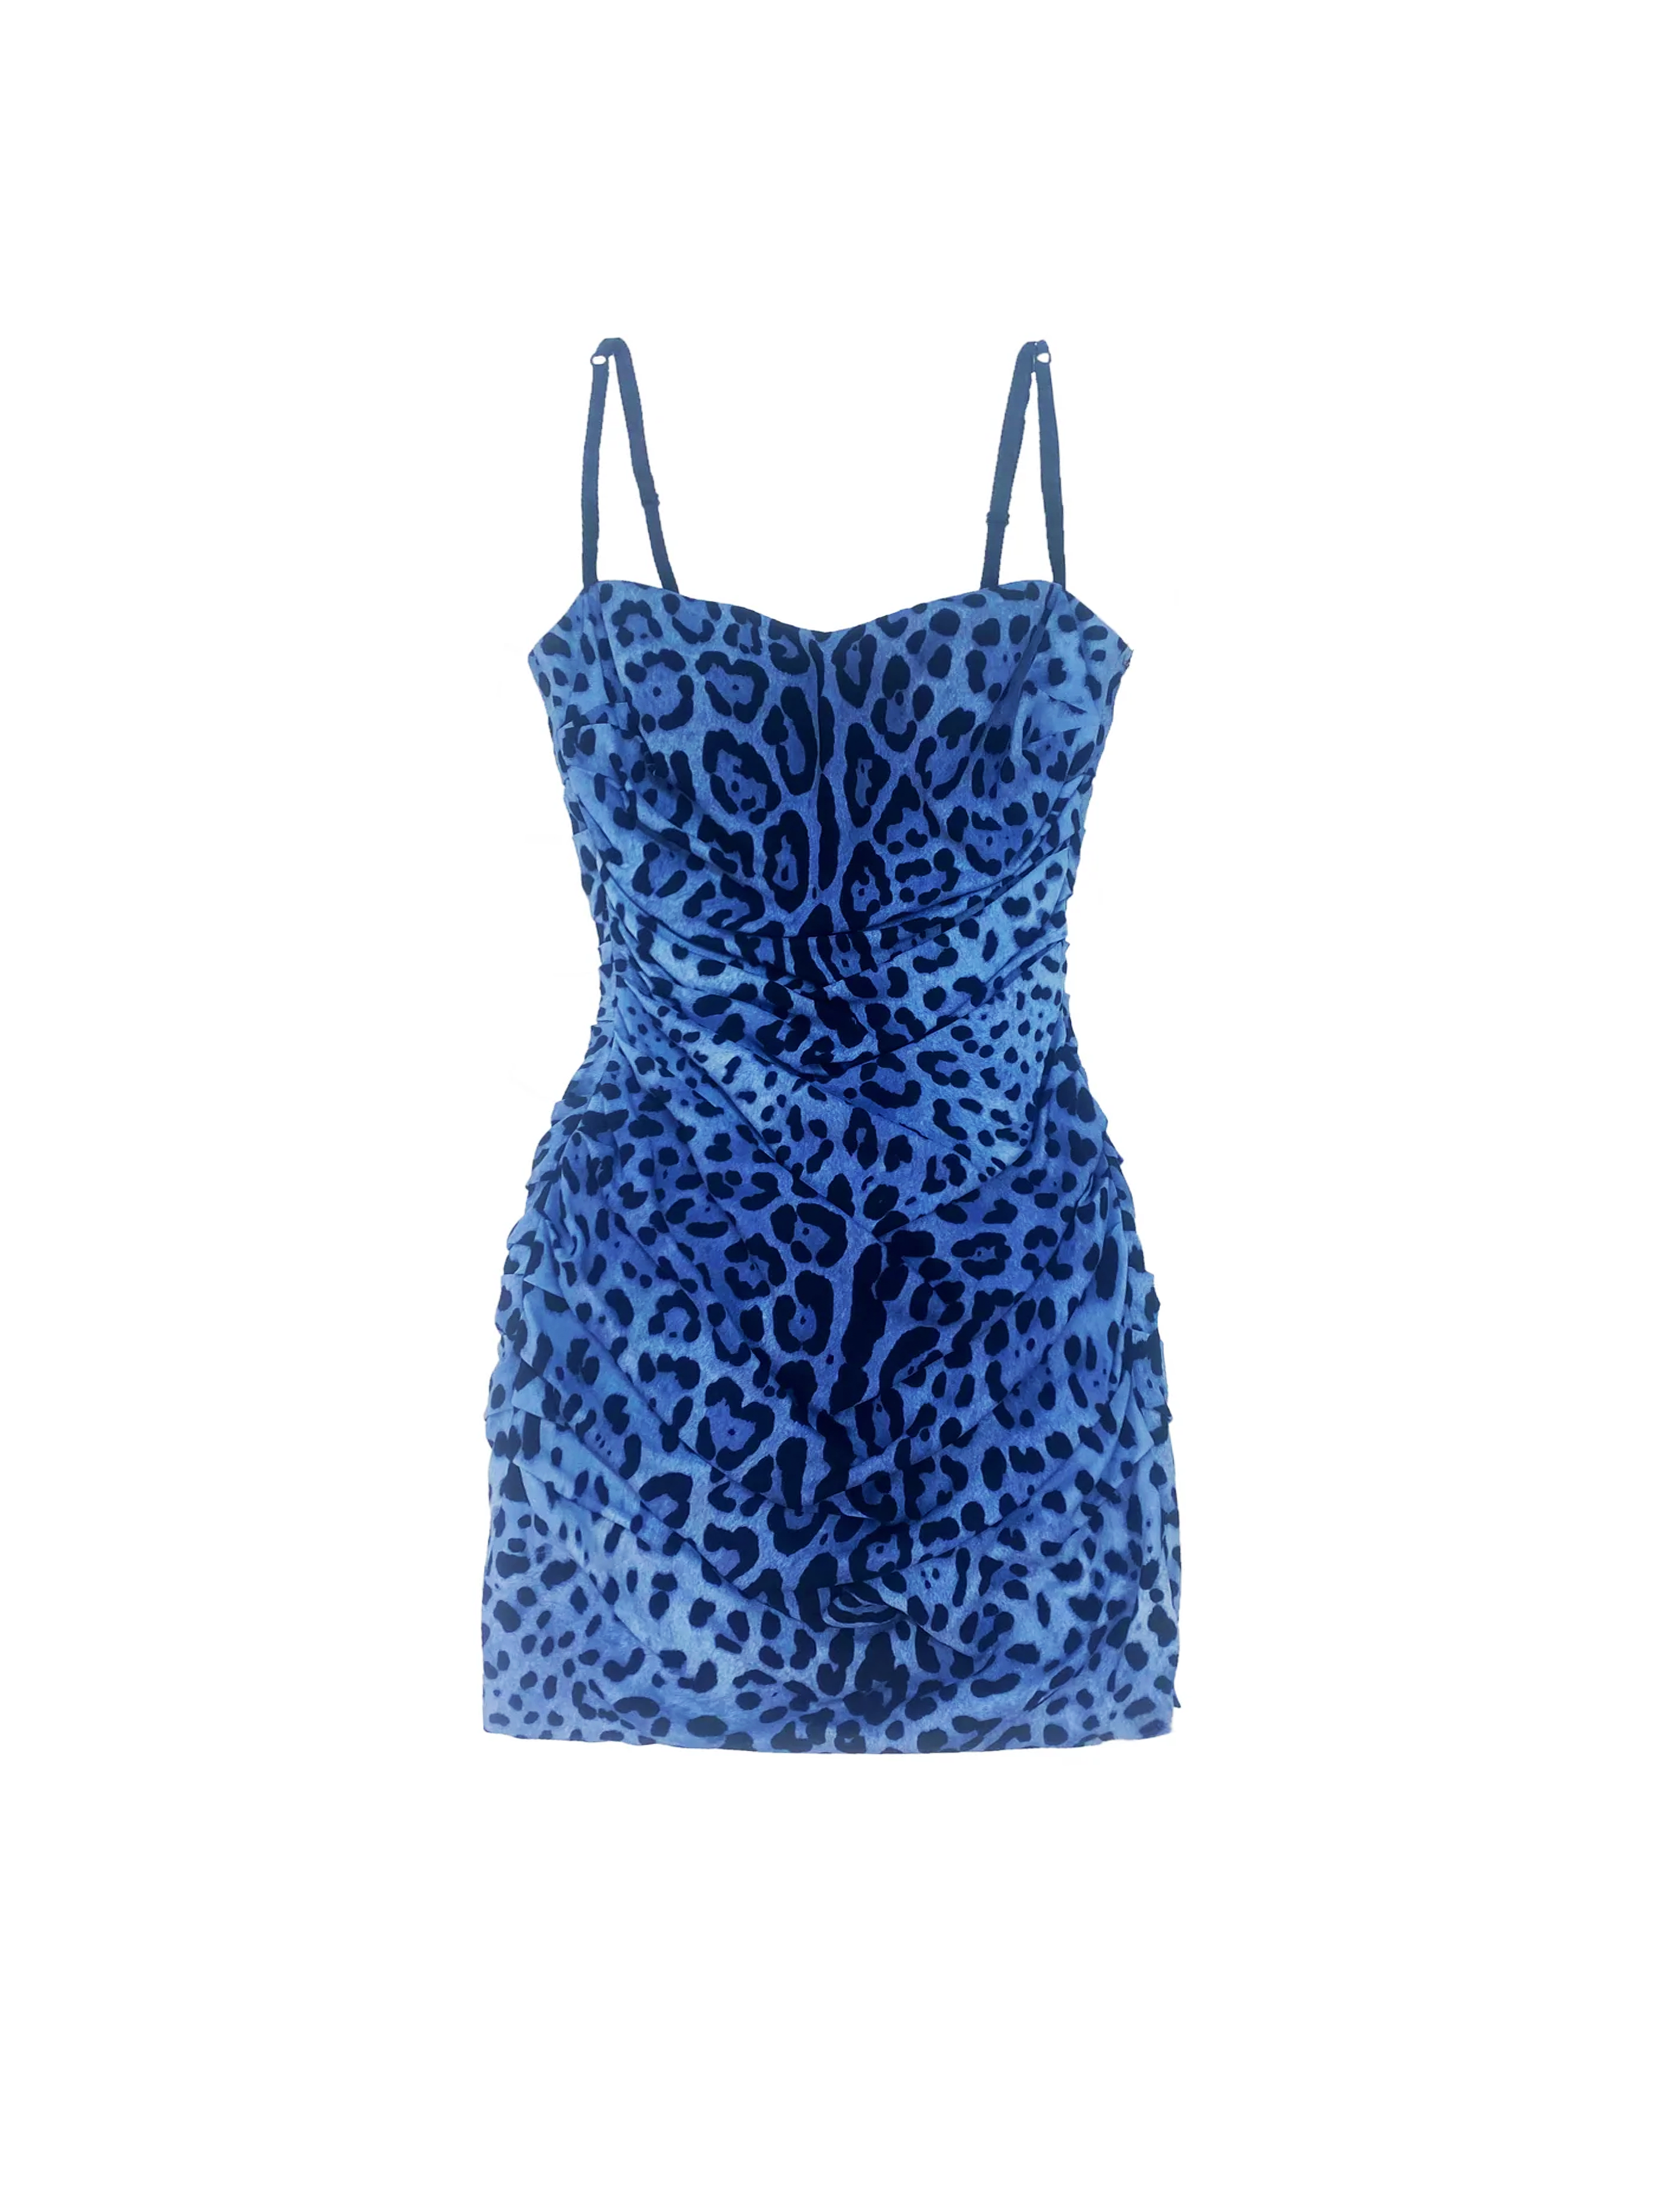 Dolce and Gabbana 2000s Leopard Blue Lingerie Dress